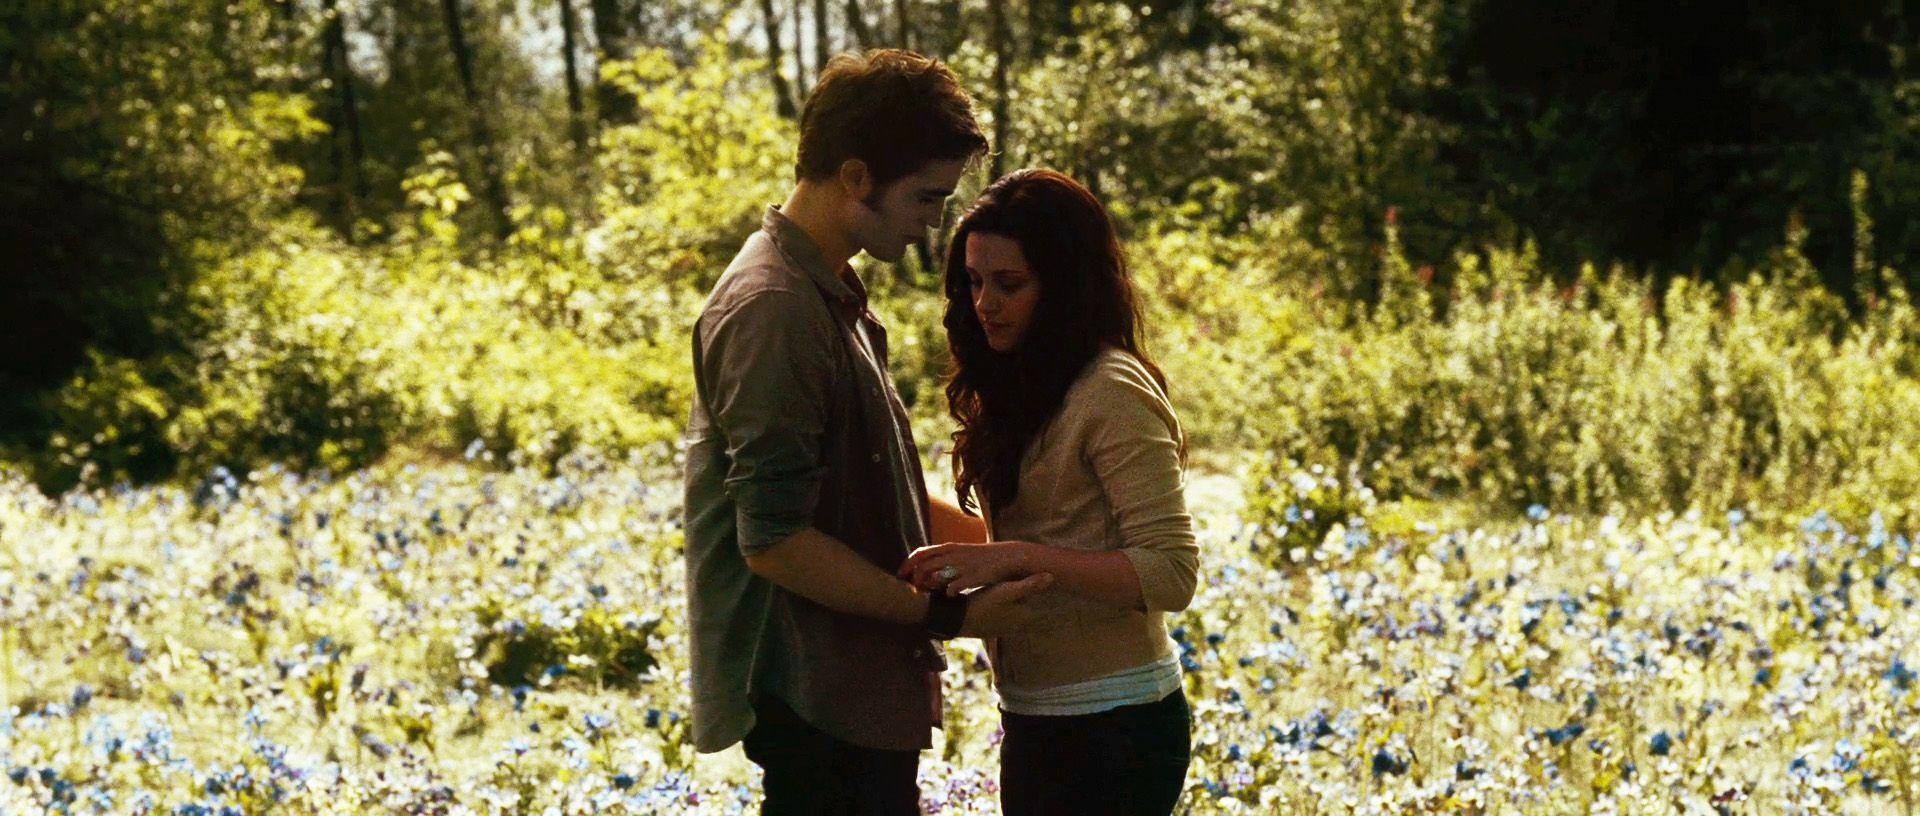 The Twilight Saga: Eclipse trailer image #1